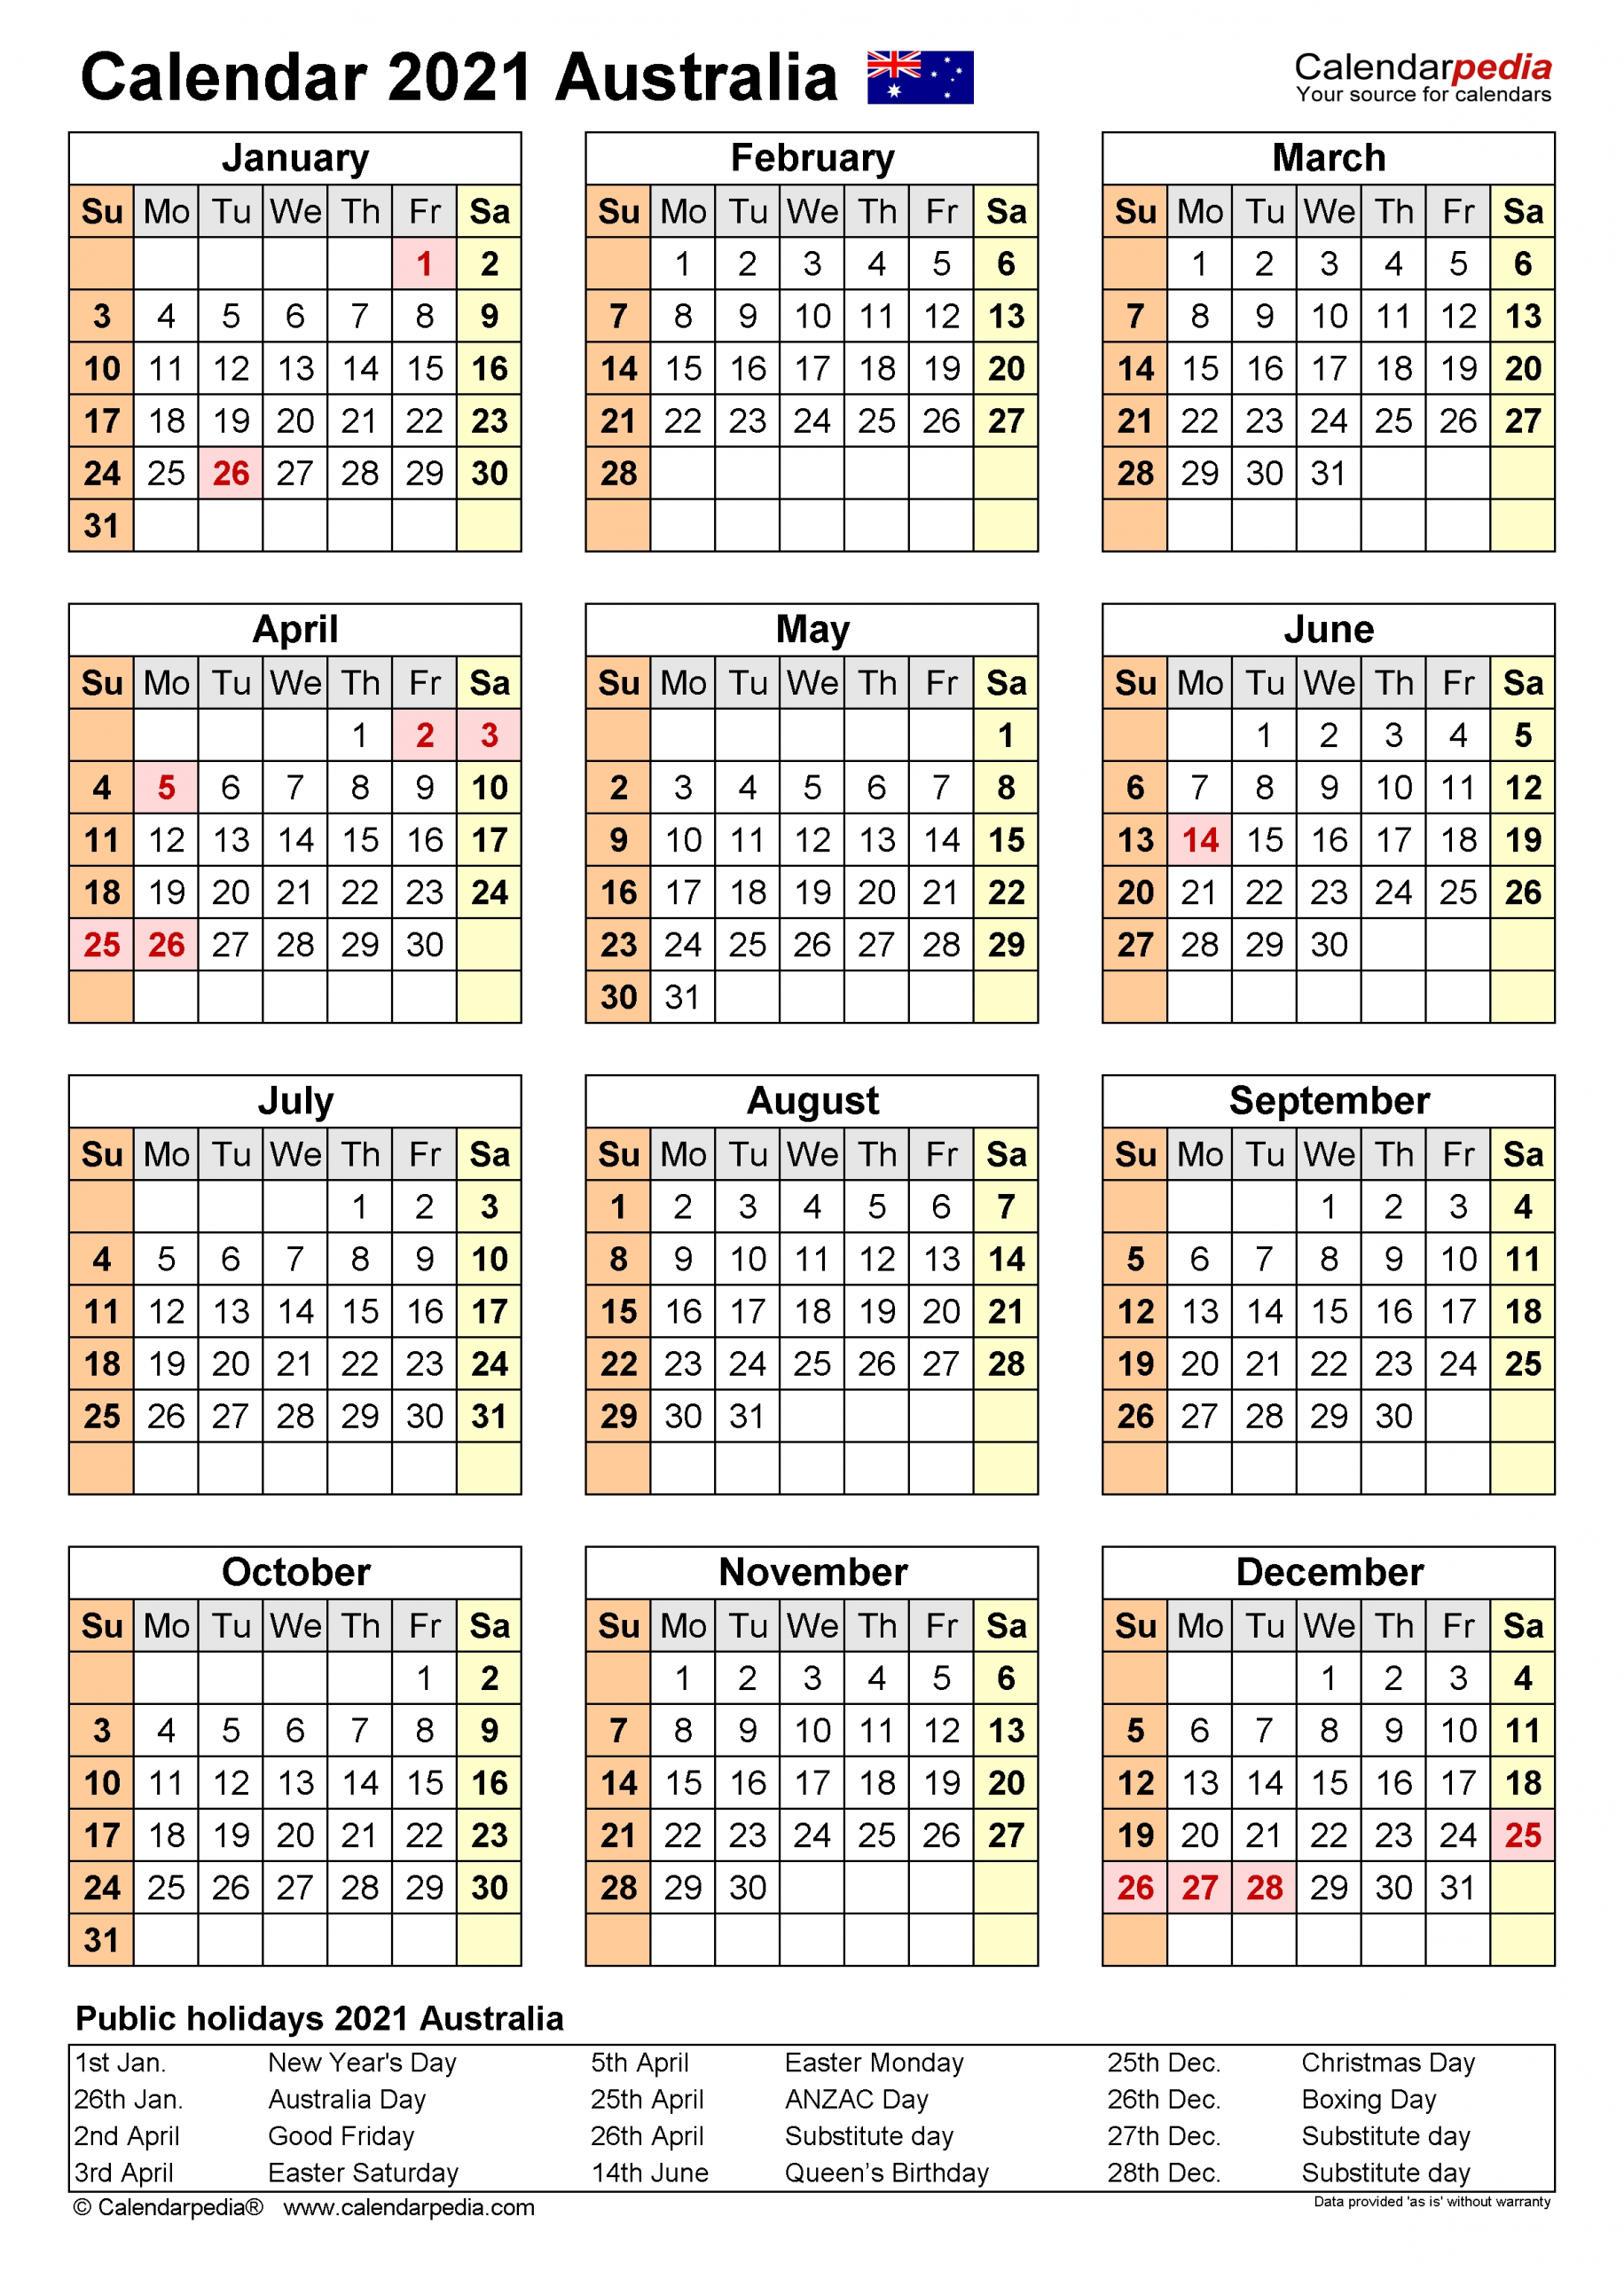 Get Australia Payroll Calendar Yearly 2021 2021 2022